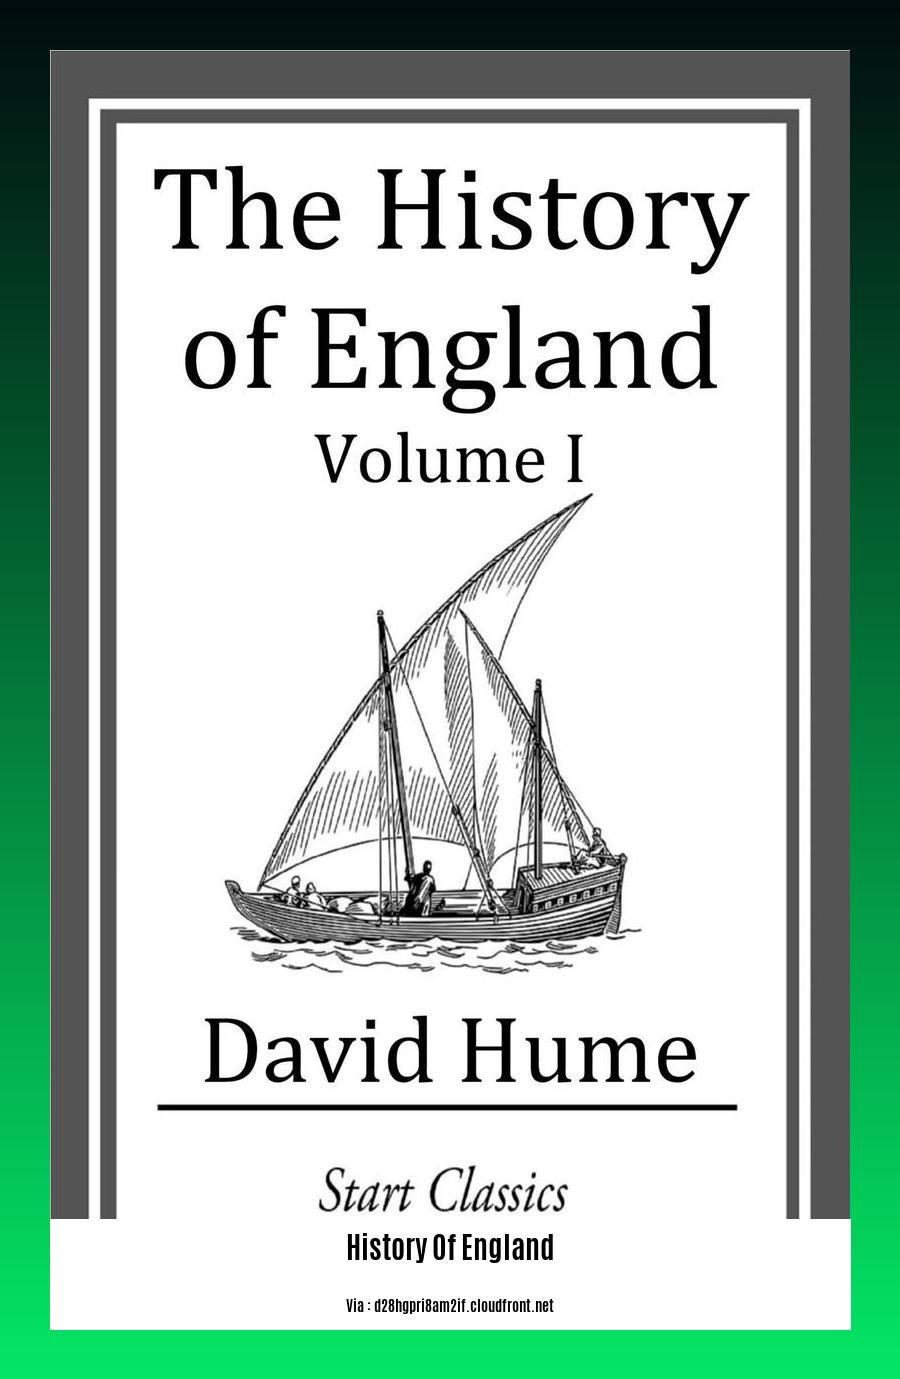 History of England 2